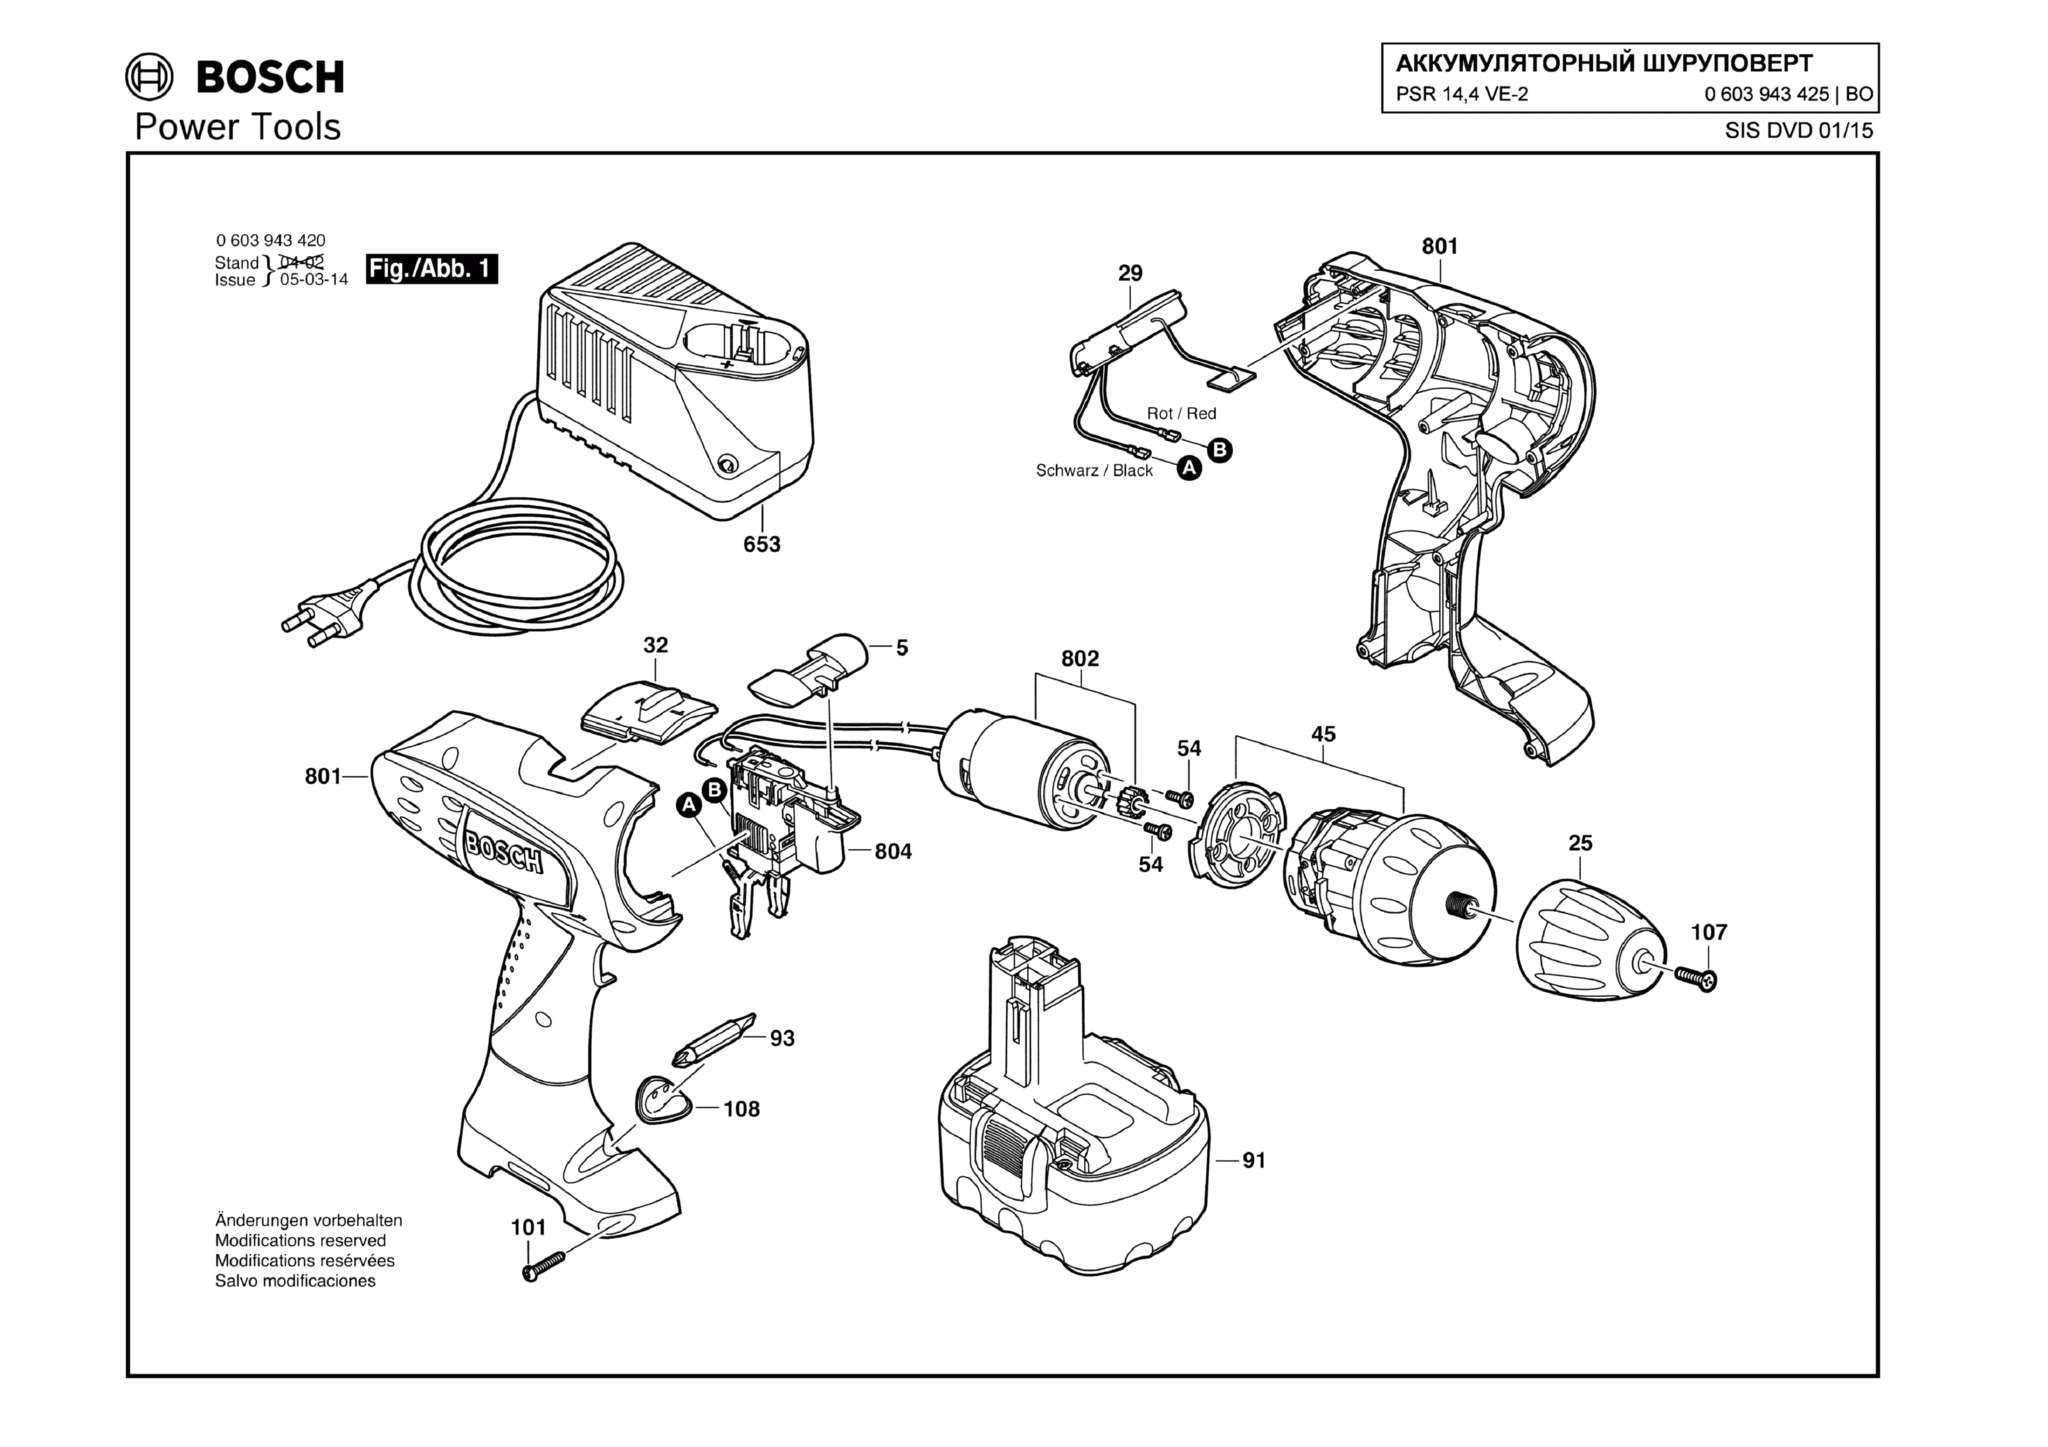 Запчасти, схема и деталировка Bosch PSR 14,4 VE-2 (ТИП 0603943425)